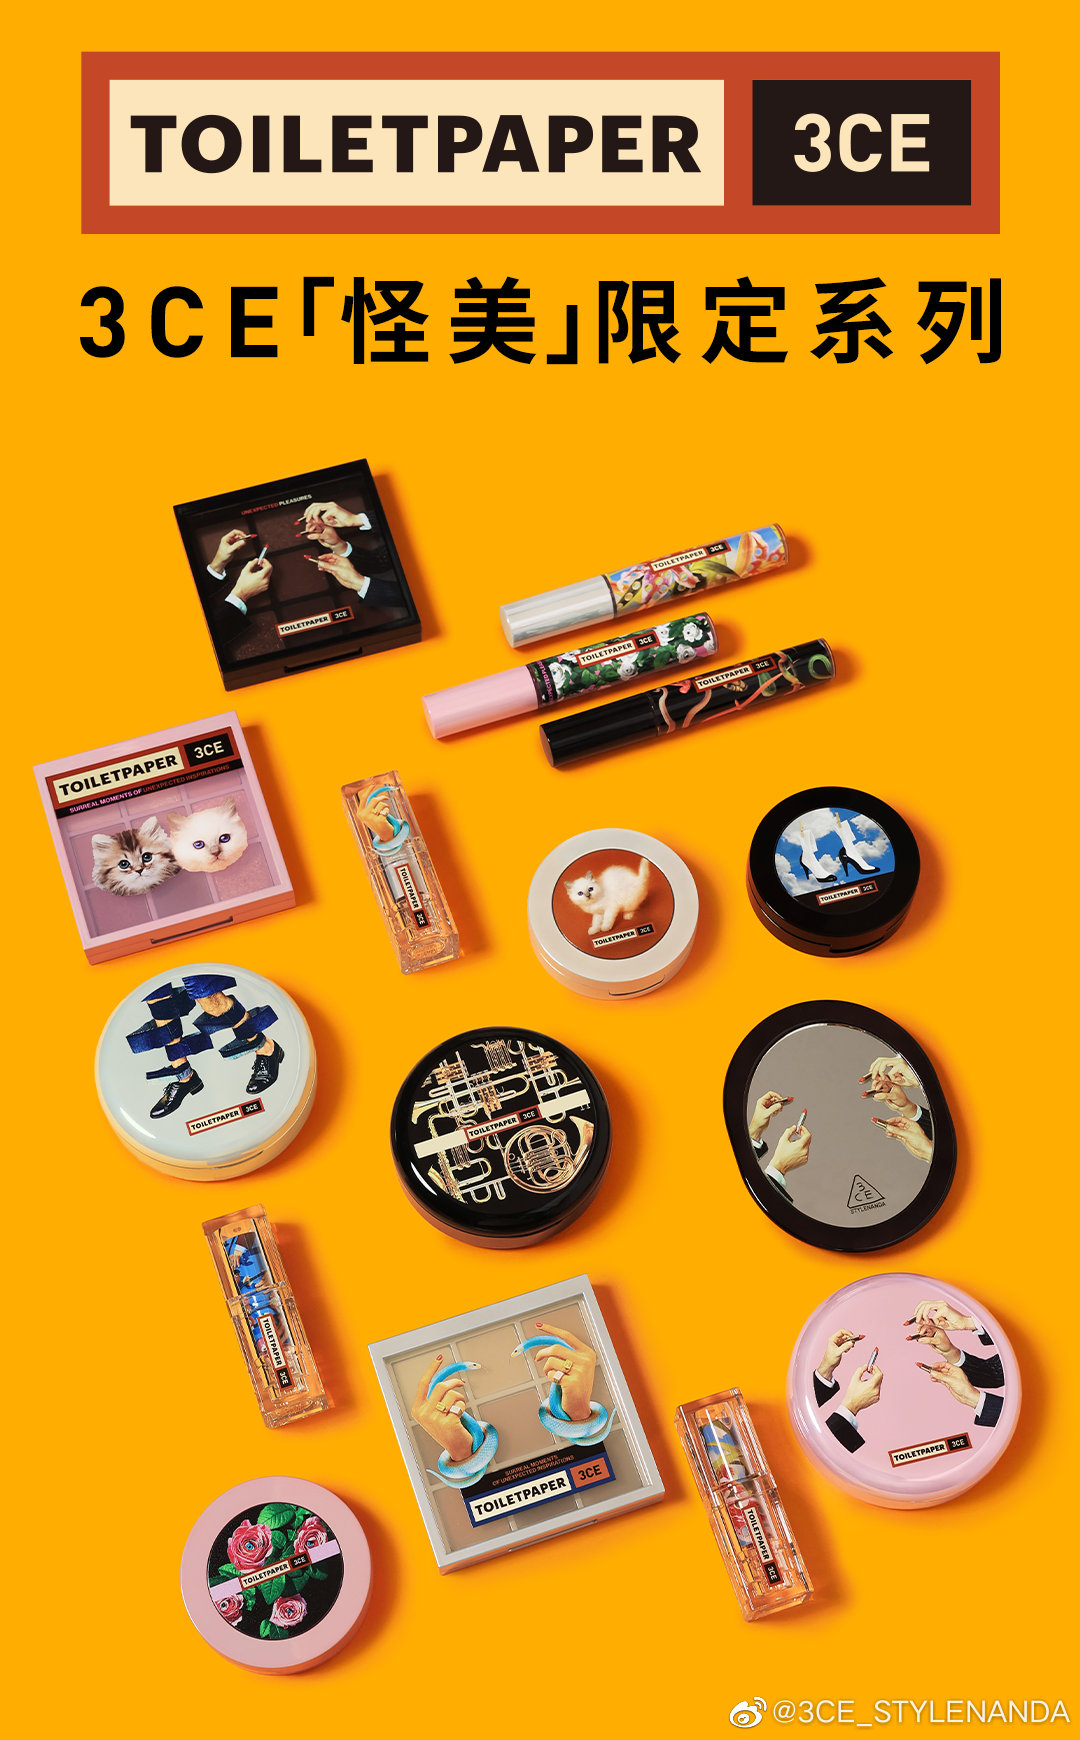 3CE × TOILETPAPER 带来「怪美」限定系列